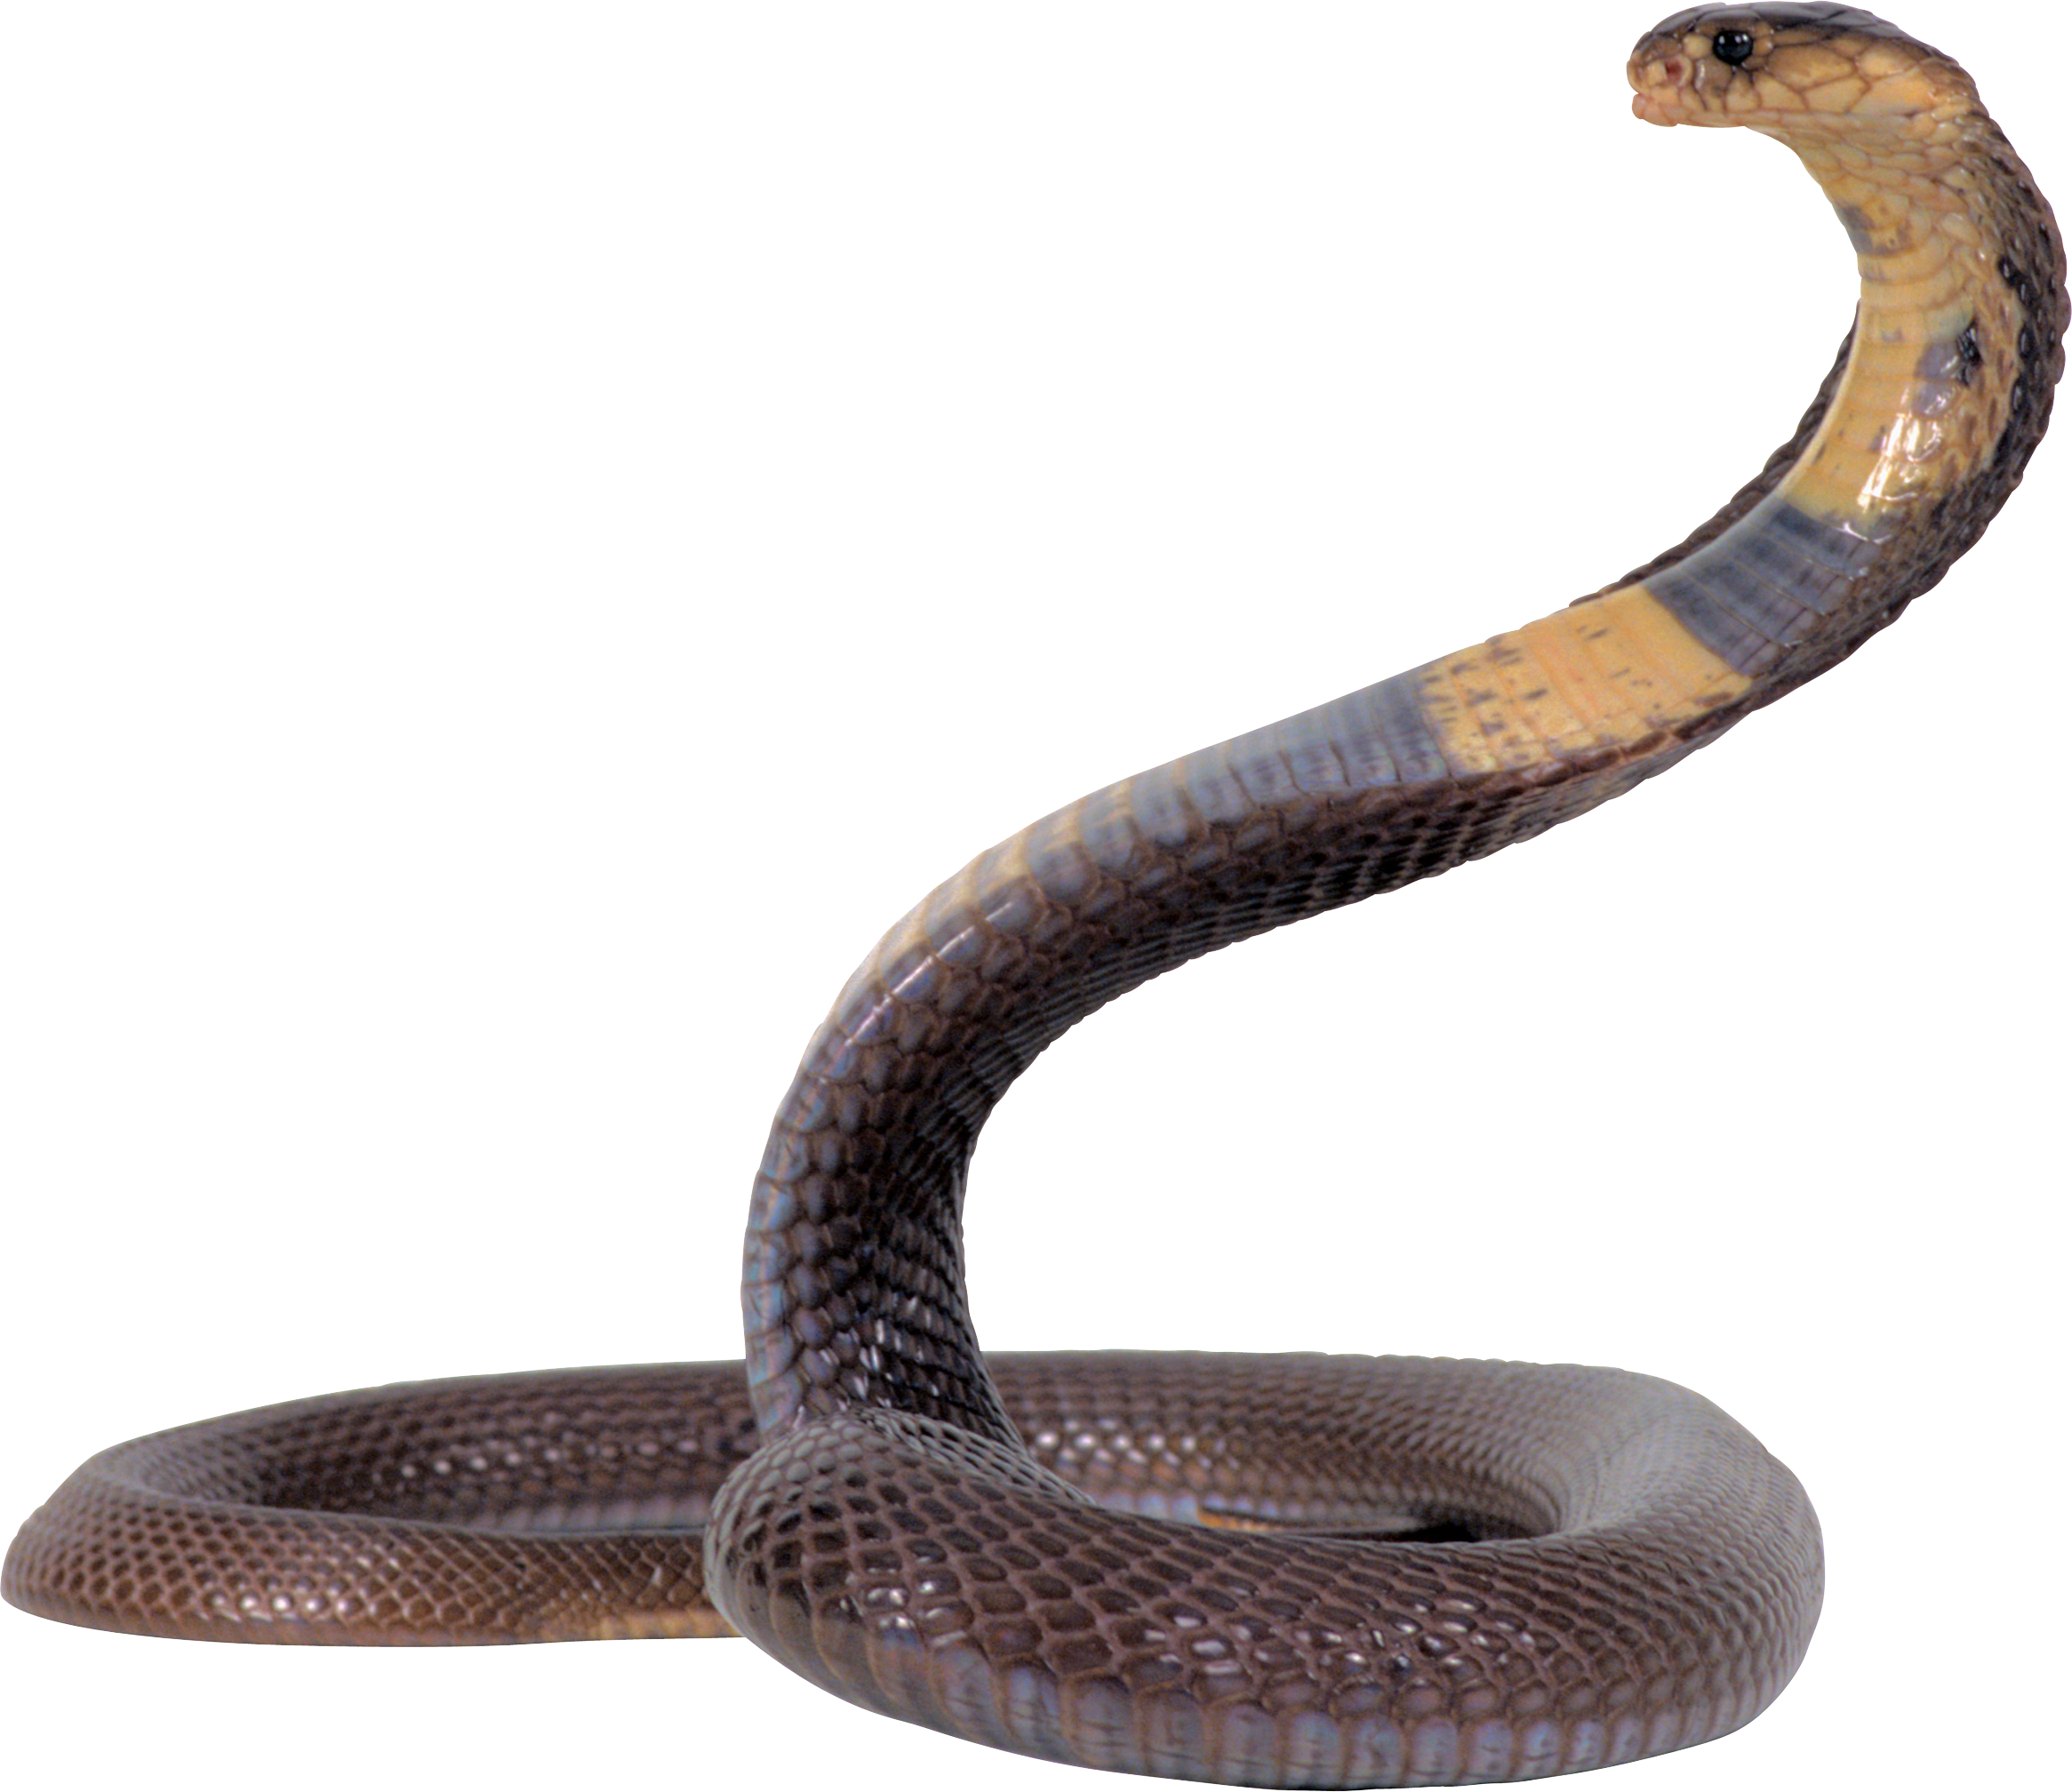 Cobra Snake Hd PNG Image